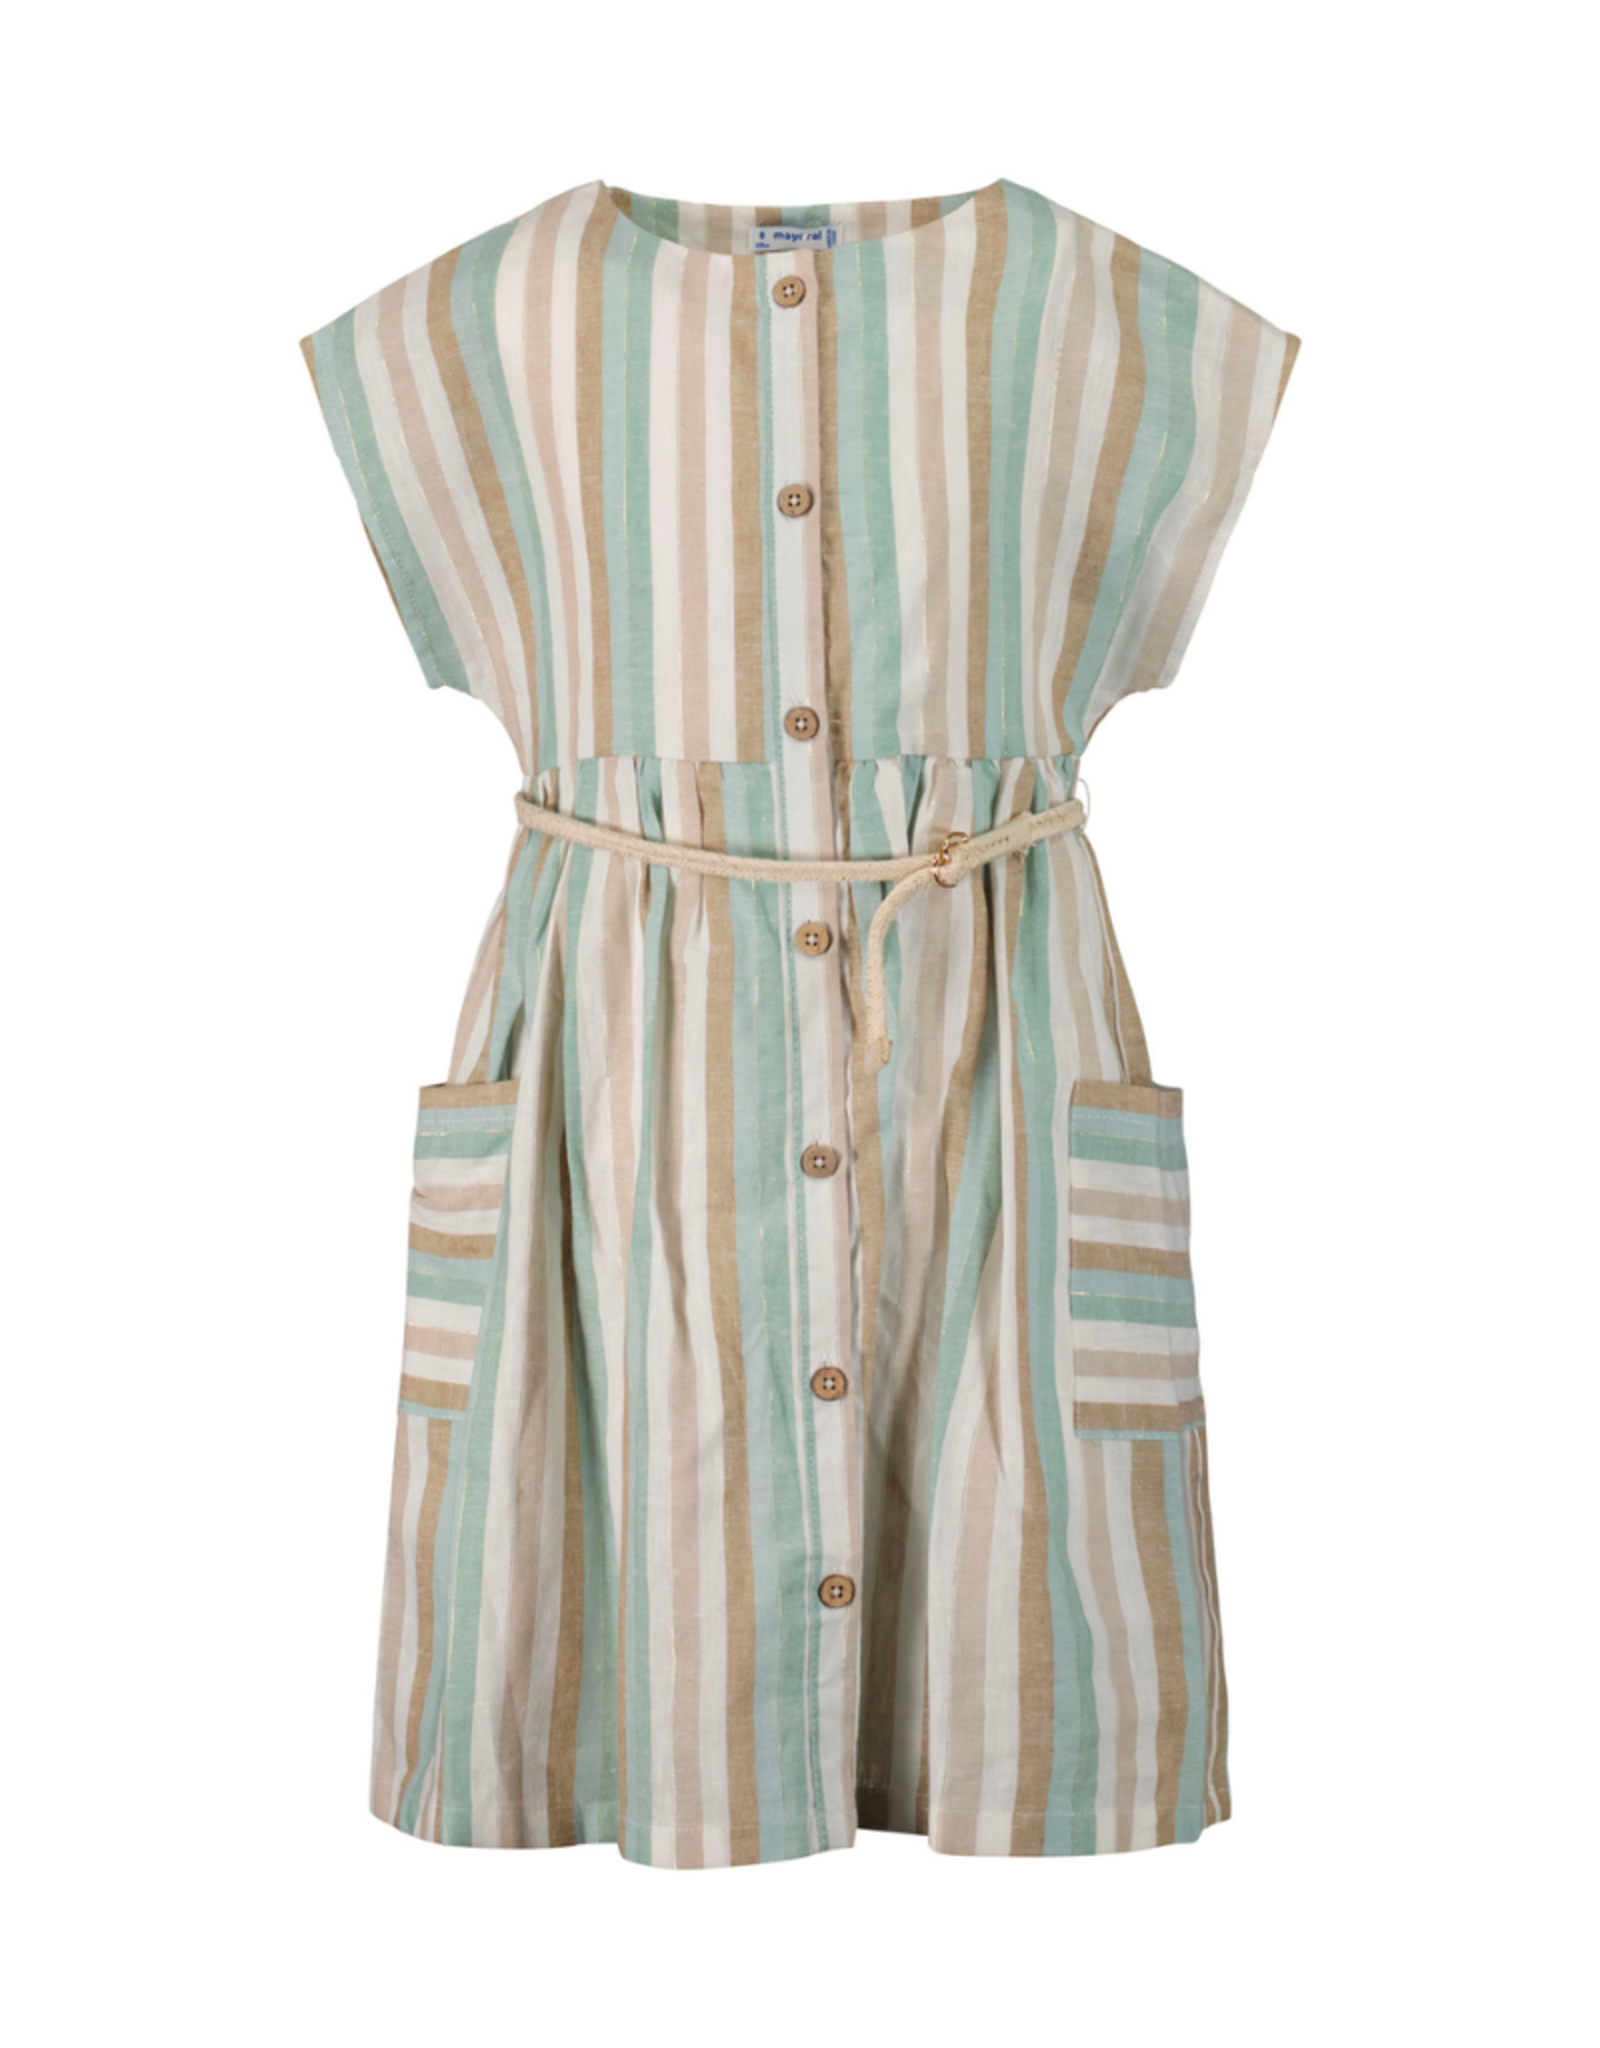 Mayoral Striped Linen Dress w/ Belt (3929), Jade